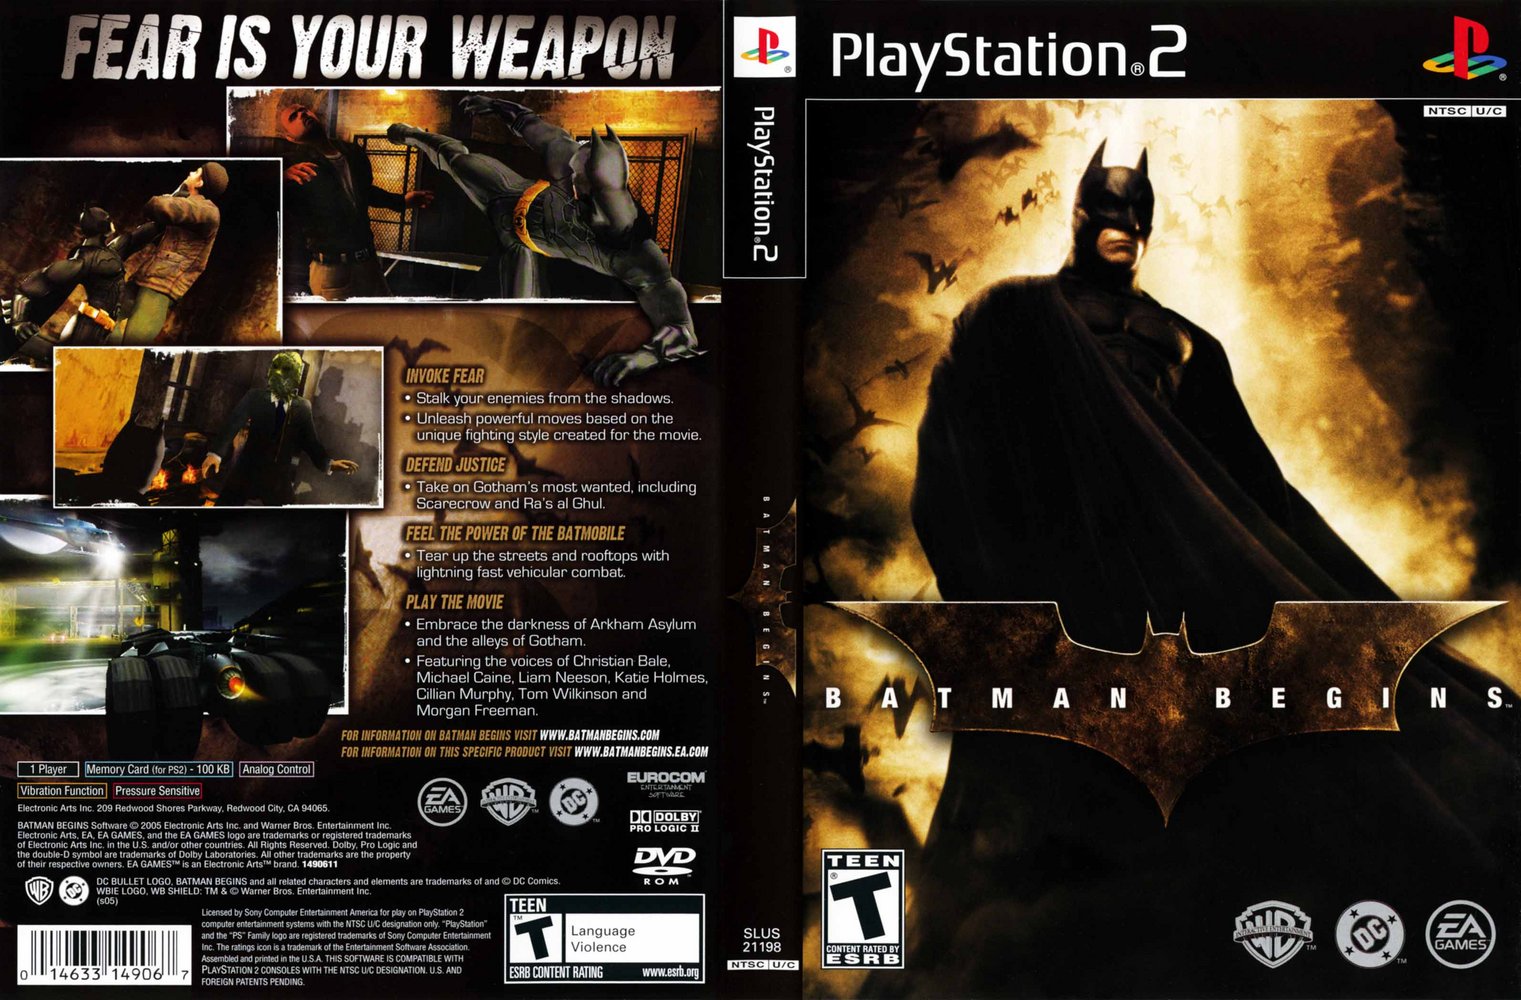 Darkwatch Sony PlayStation 2 (PS2) ROM / ISO Download - Rom Hustler